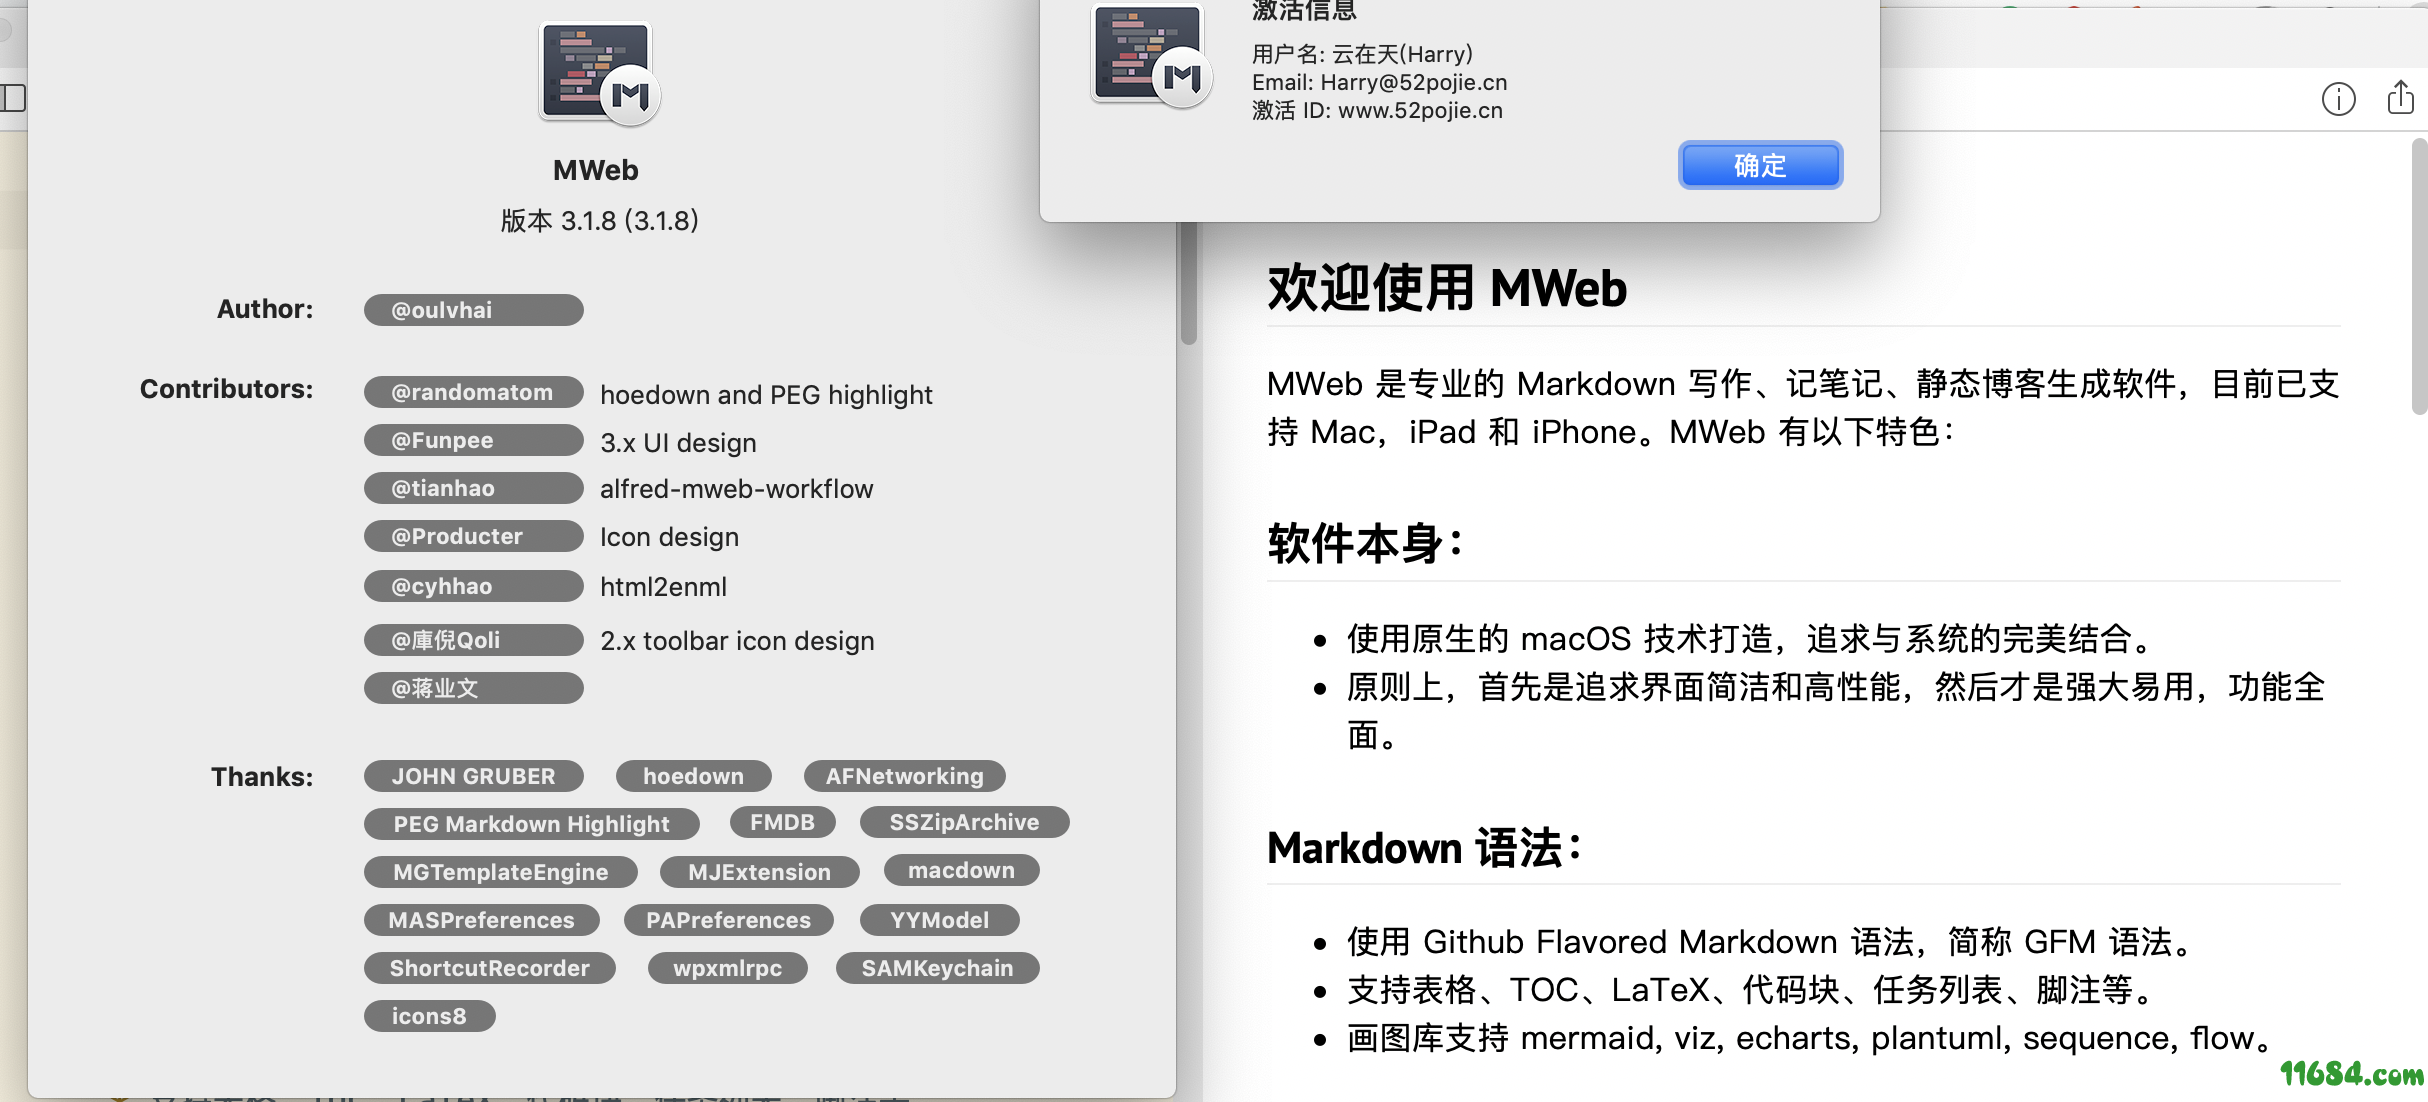 MWeb for Mac 3.1.8 Crack By 云在天(Harry)下载